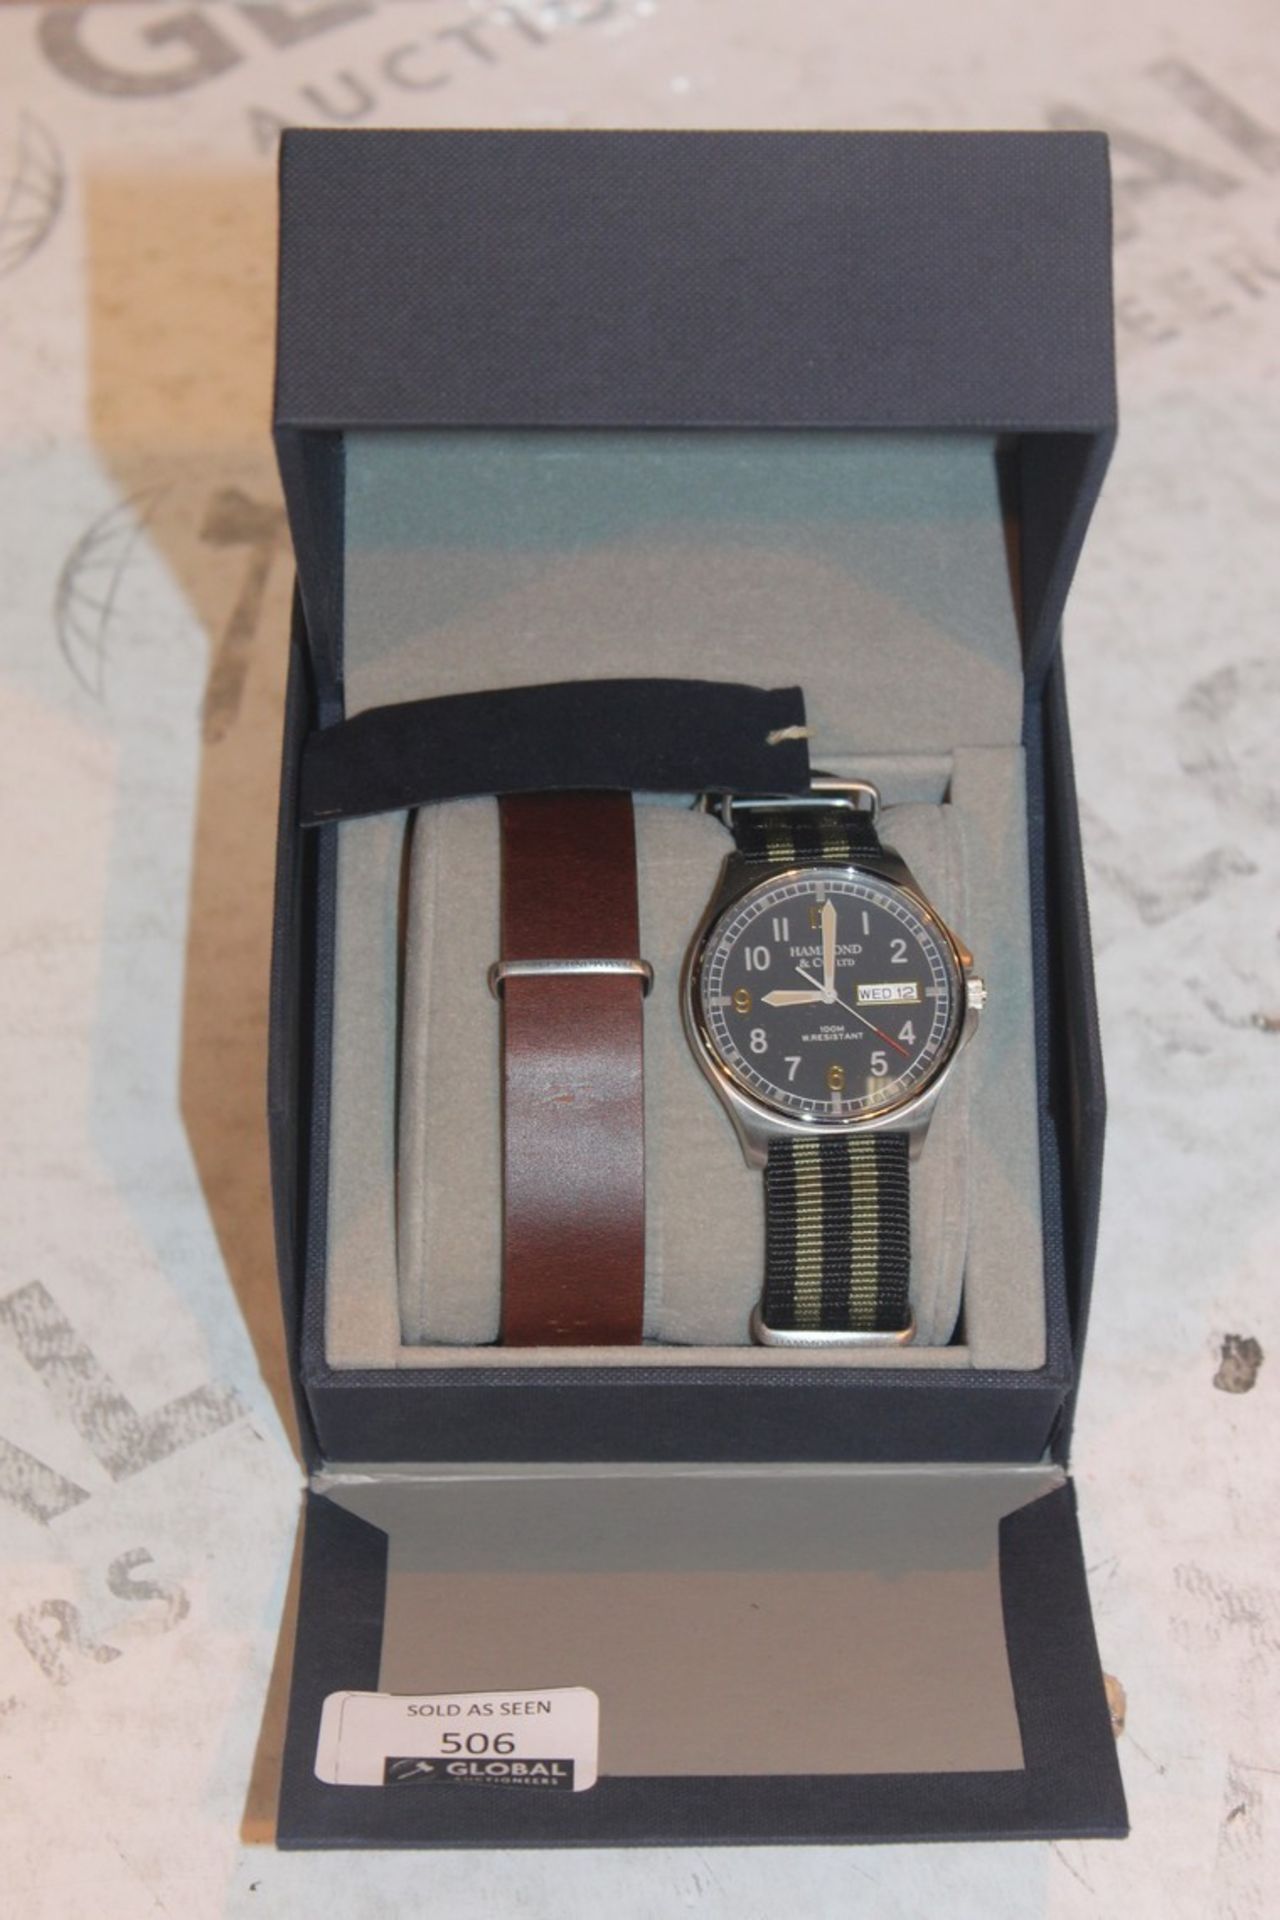 Boxed Hammond & Co Ltd Patrick Grant Gift Pack Gents Designer Wrist Watch RRP £90 (Untested Customer